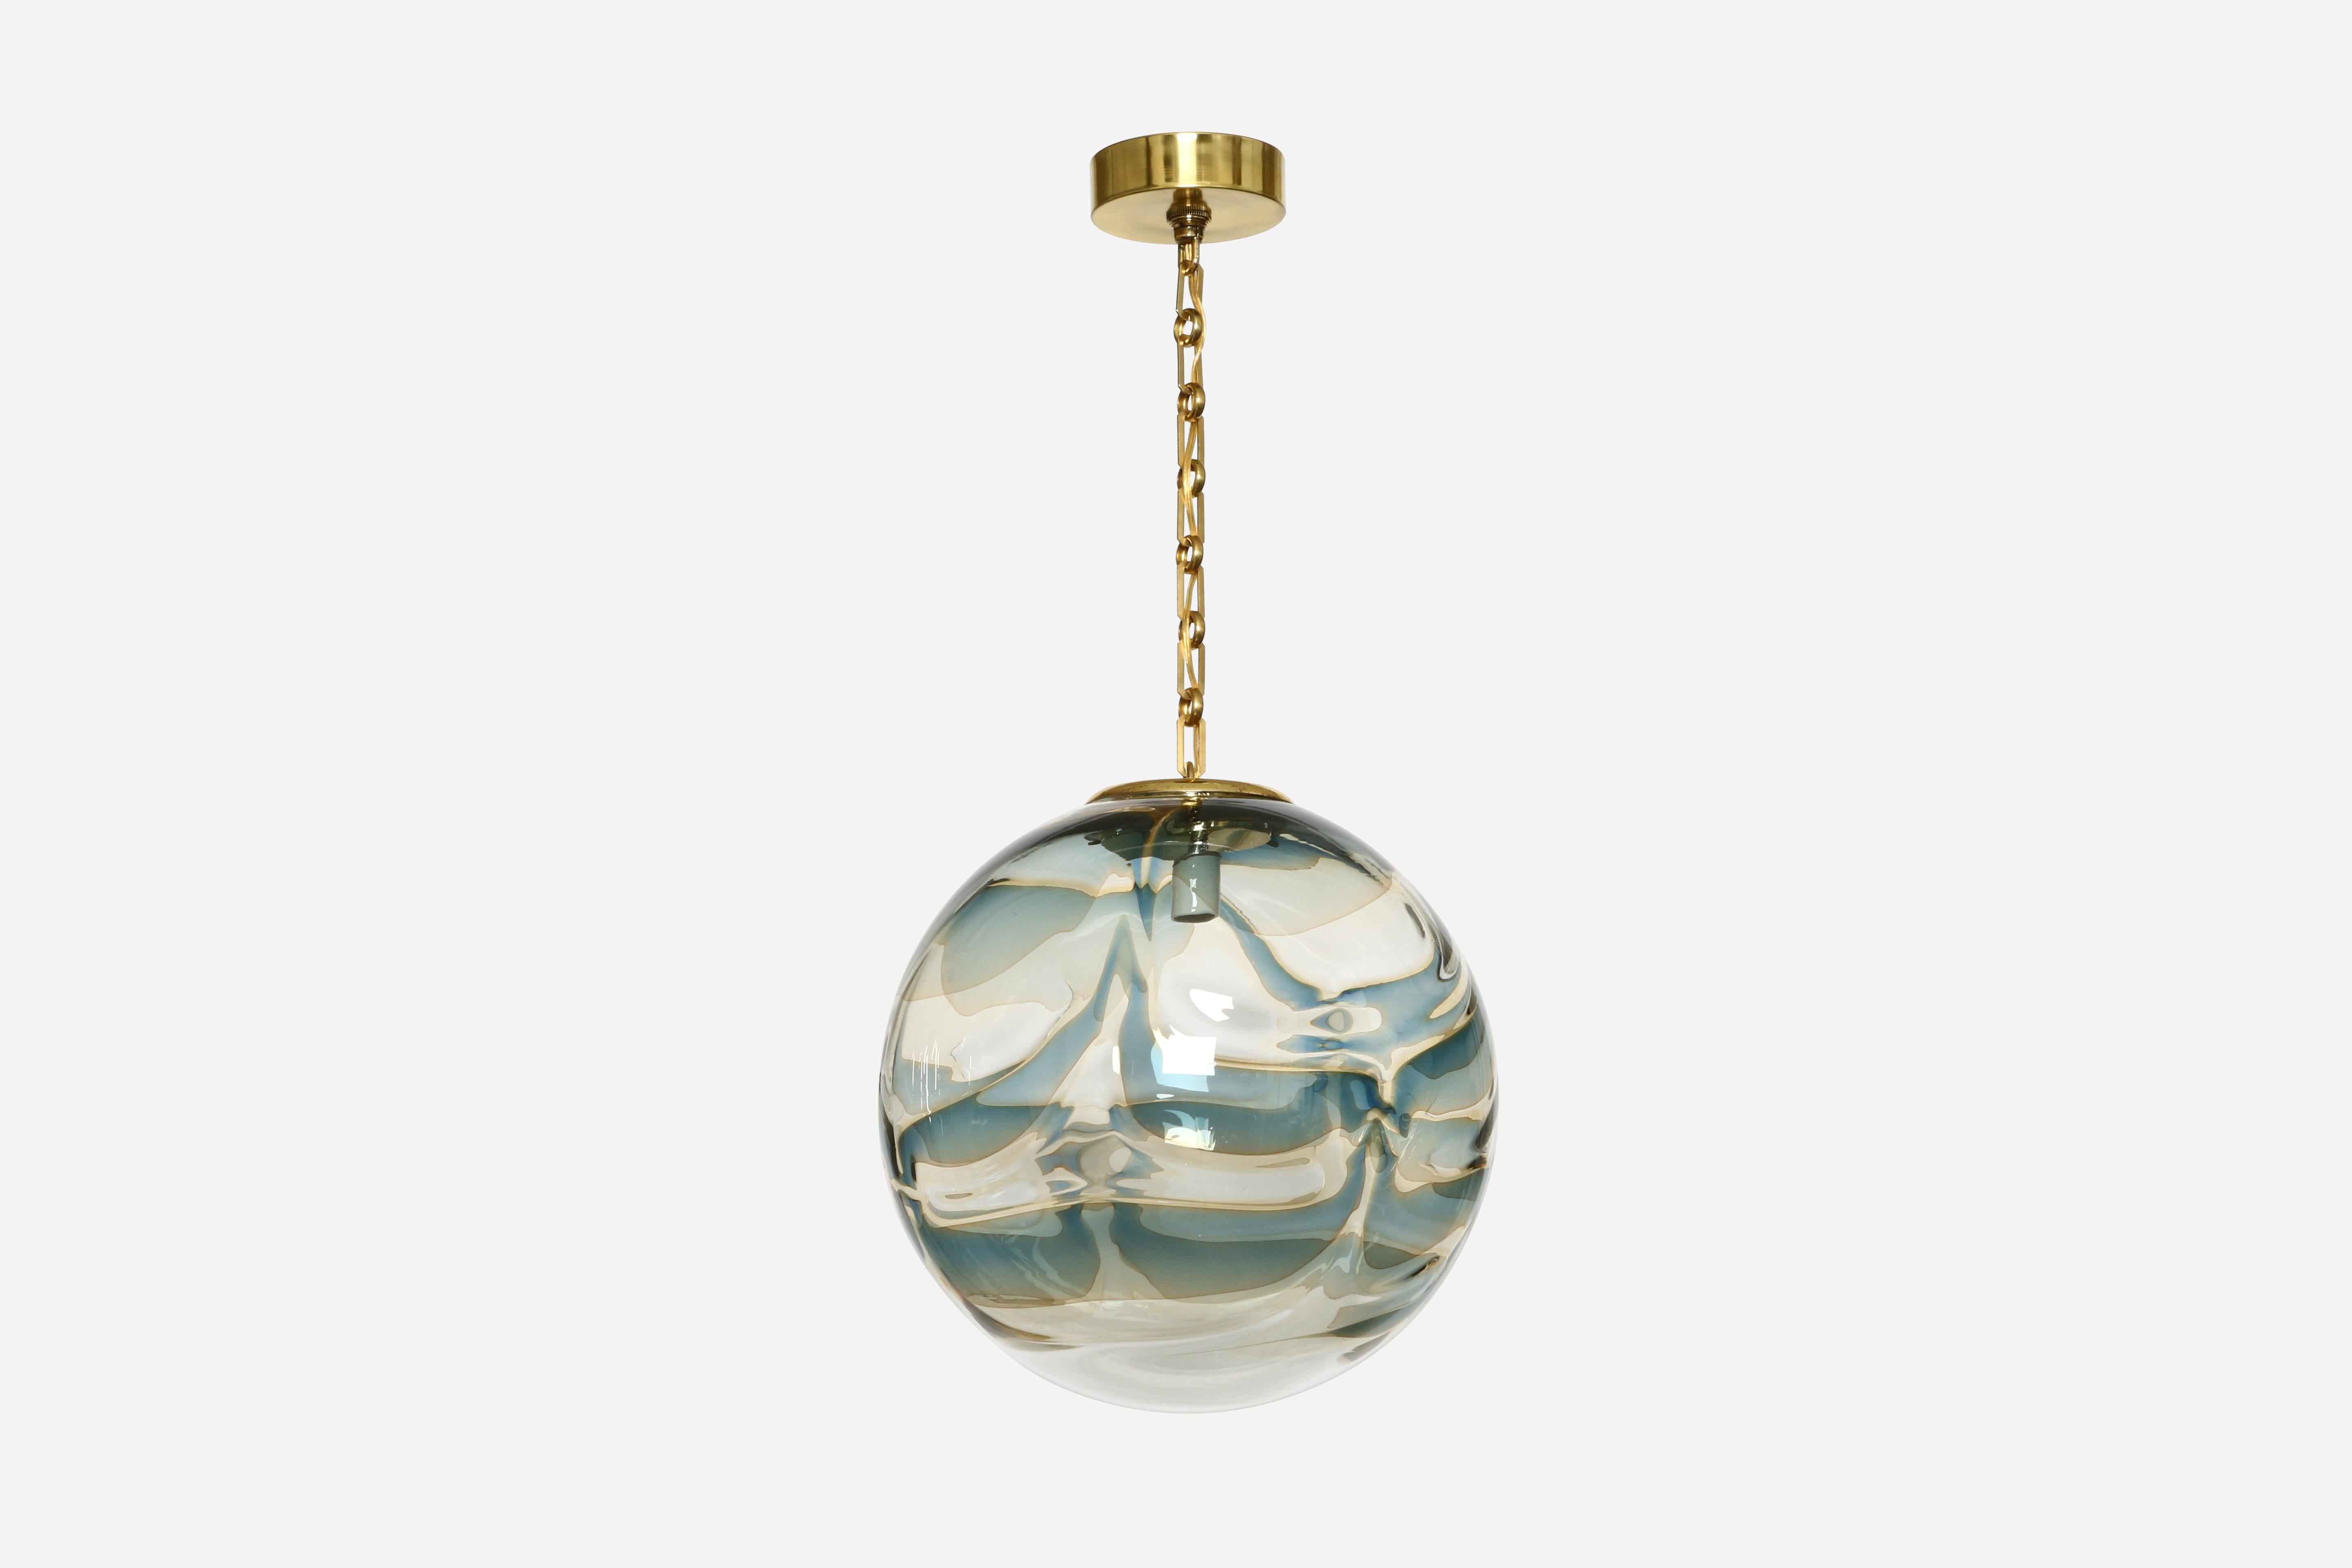 Murano glass ceiling pendant.
Italy 1960s
Handblown glass, brass.